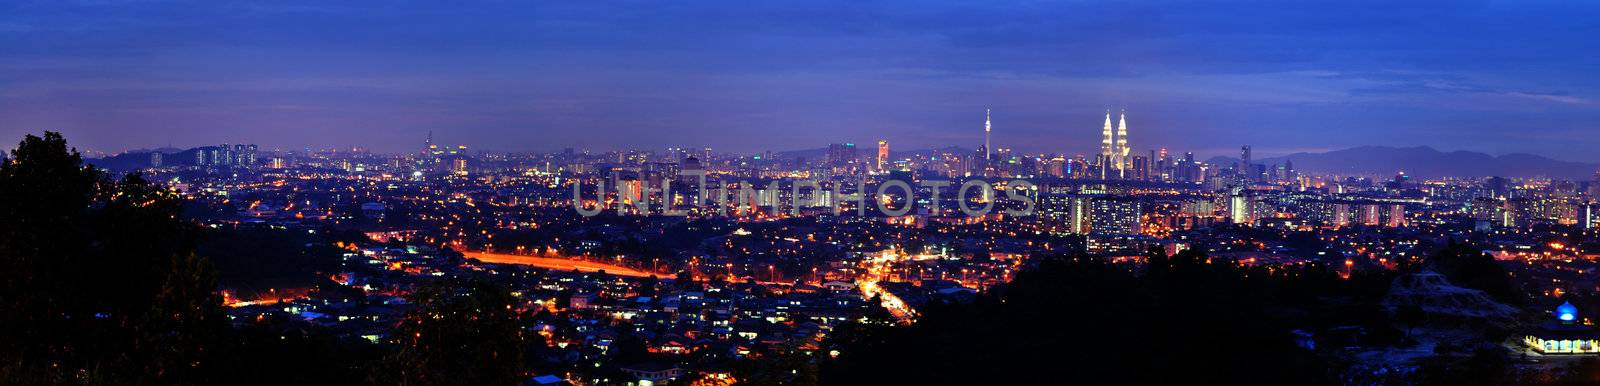 Panorama view of Kuala Lumpur, capital city of Malaysia.